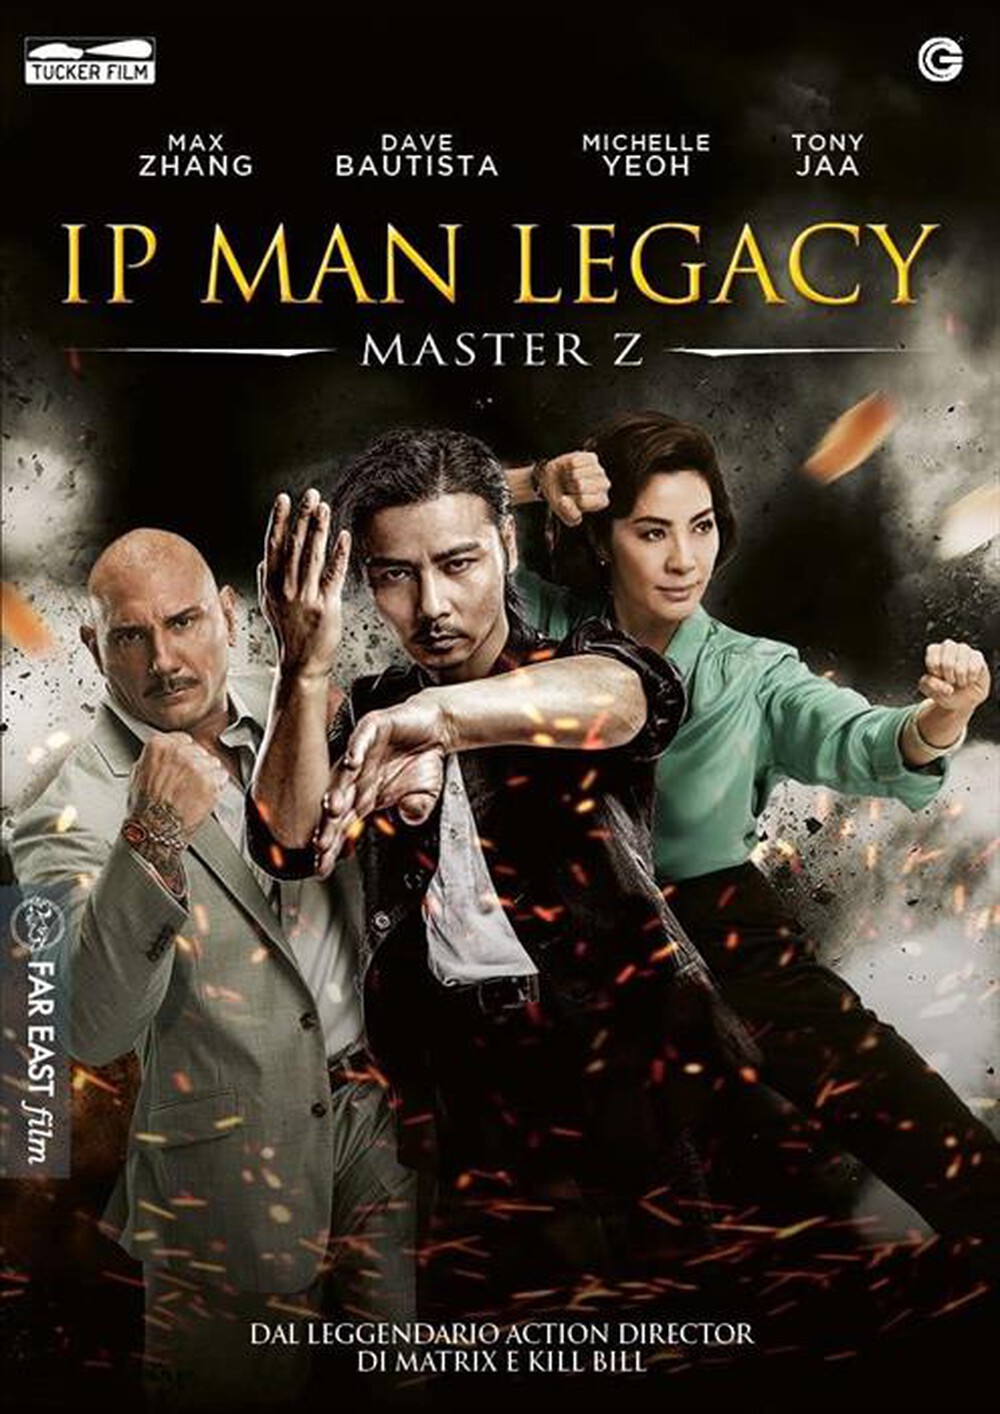 "TUCKER FILM - Master Z: Ip Man Legacy"